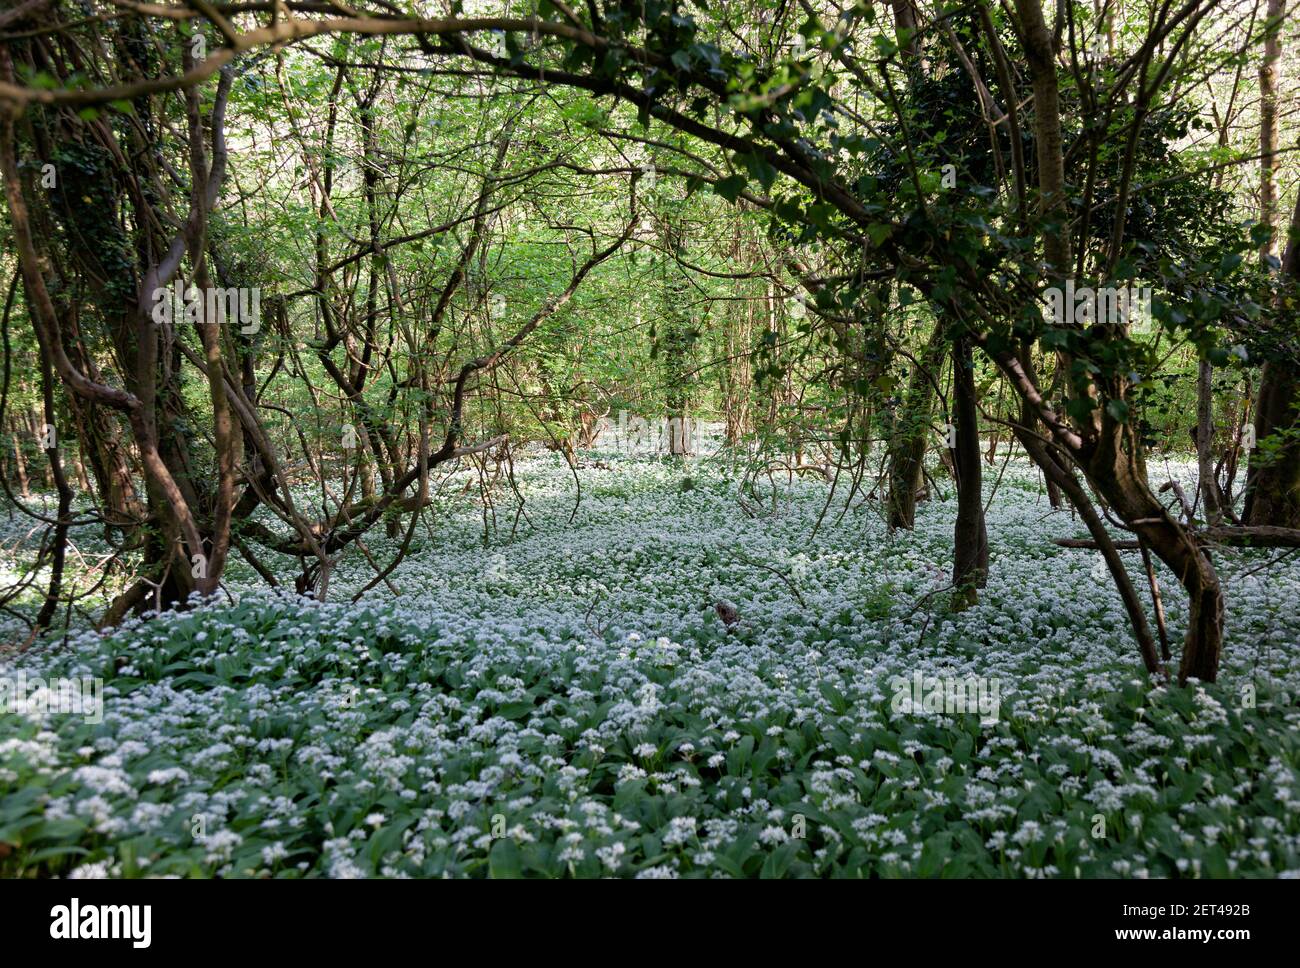 Swathes of wild garlic carpet woodland understorey in the Cotswolds near Stroud, Gloucestershire, UK Stock Photo